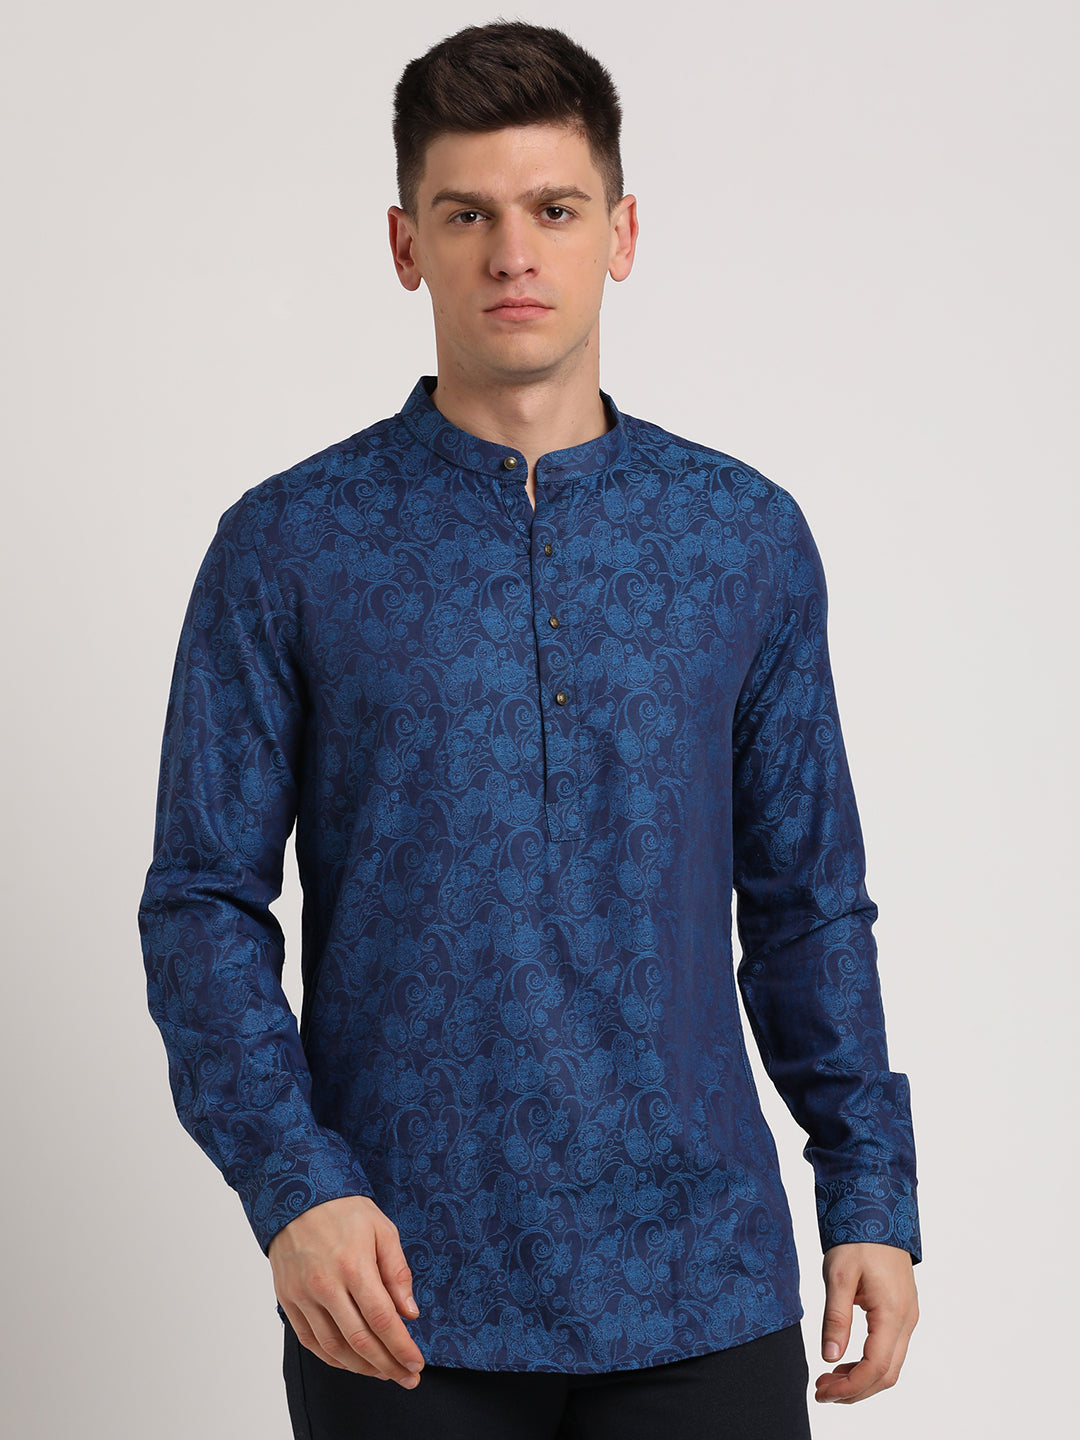 100% Cotton Blue Jacquard Kurta Full Sleeve Ceremonial Shirt